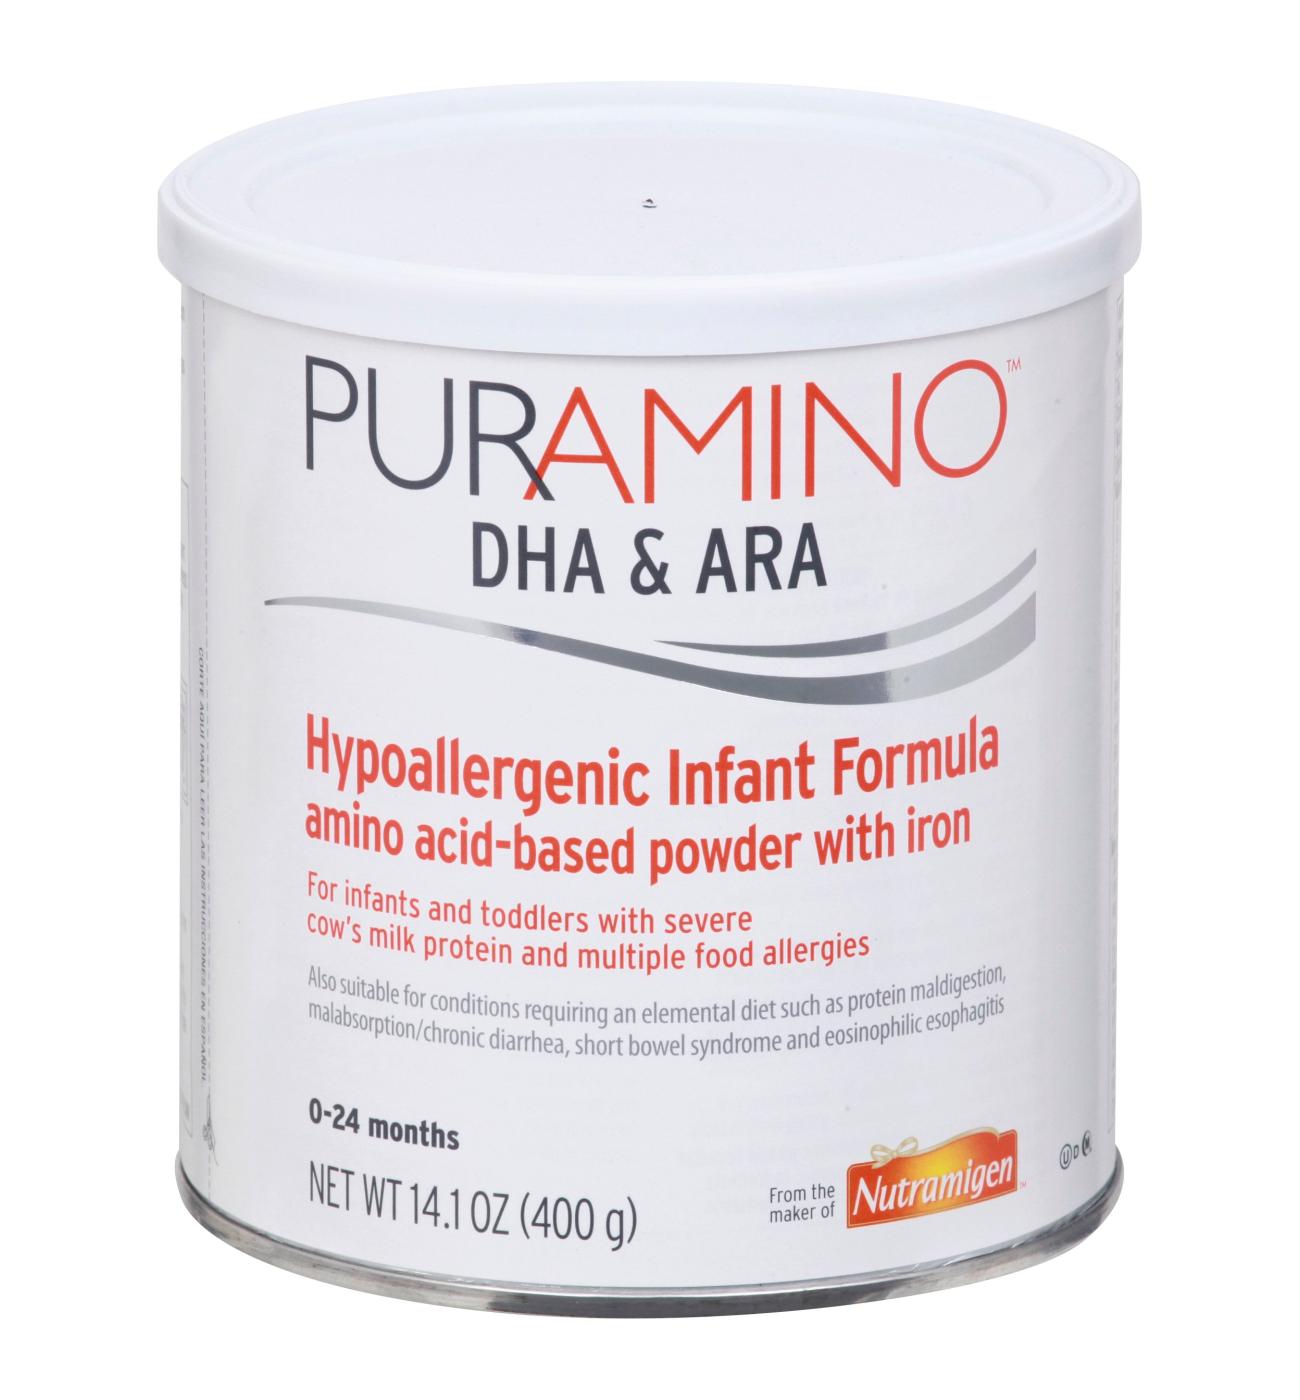 Puramino DHA & ARA Hypoallergenic Powder Infant Formula with Iron; image 1 of 3